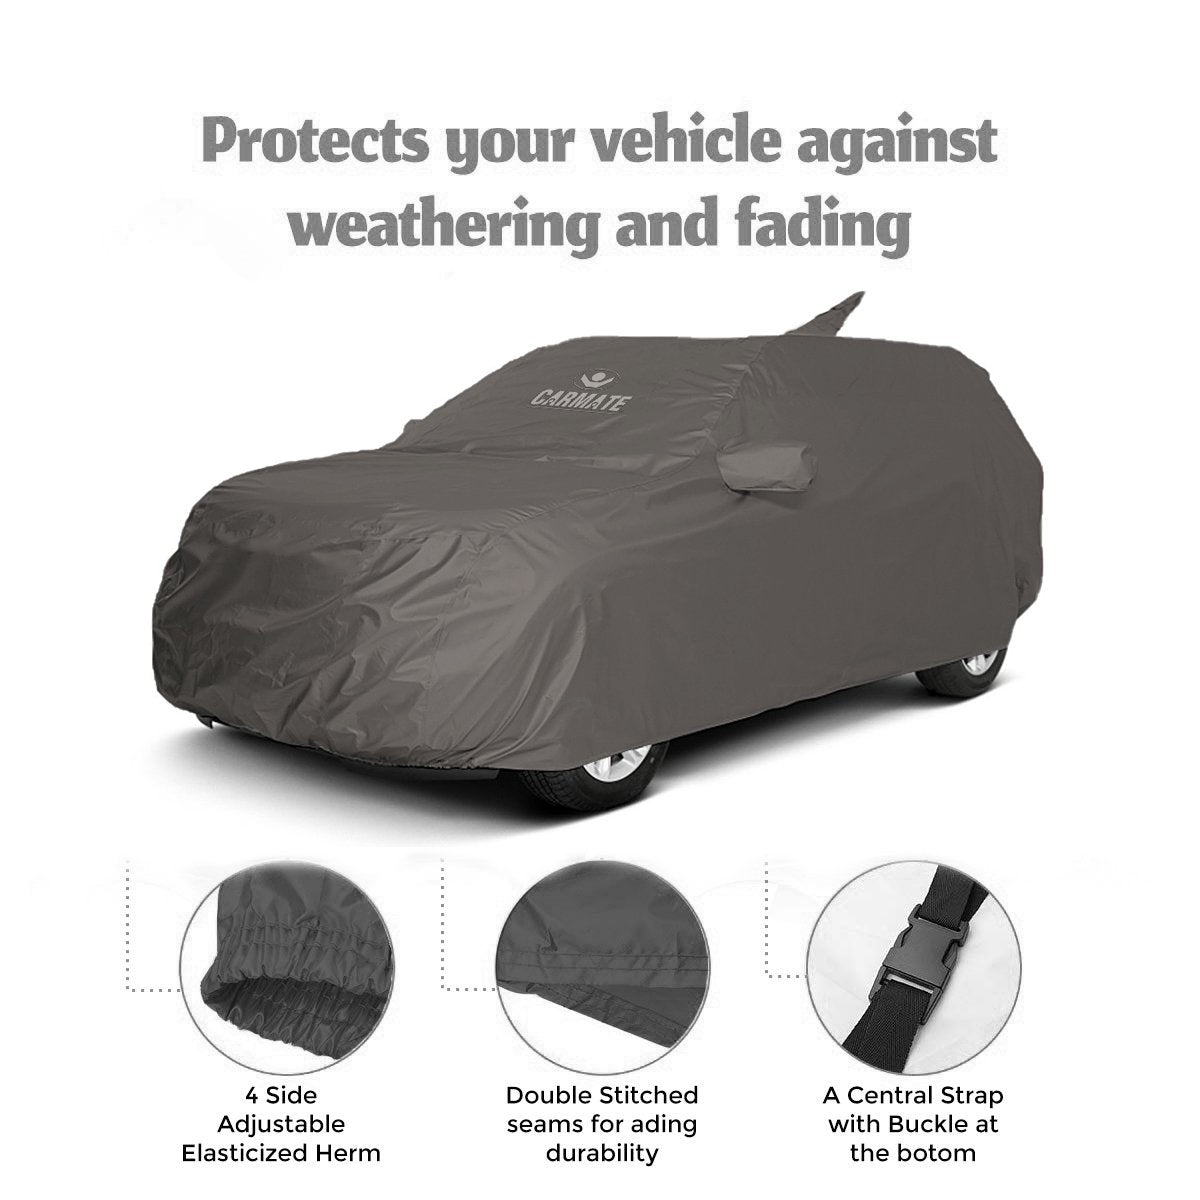 Carmate Car Body Cover 100% Waterproof Pride (Grey) for BMW - 328I - CARMATE®